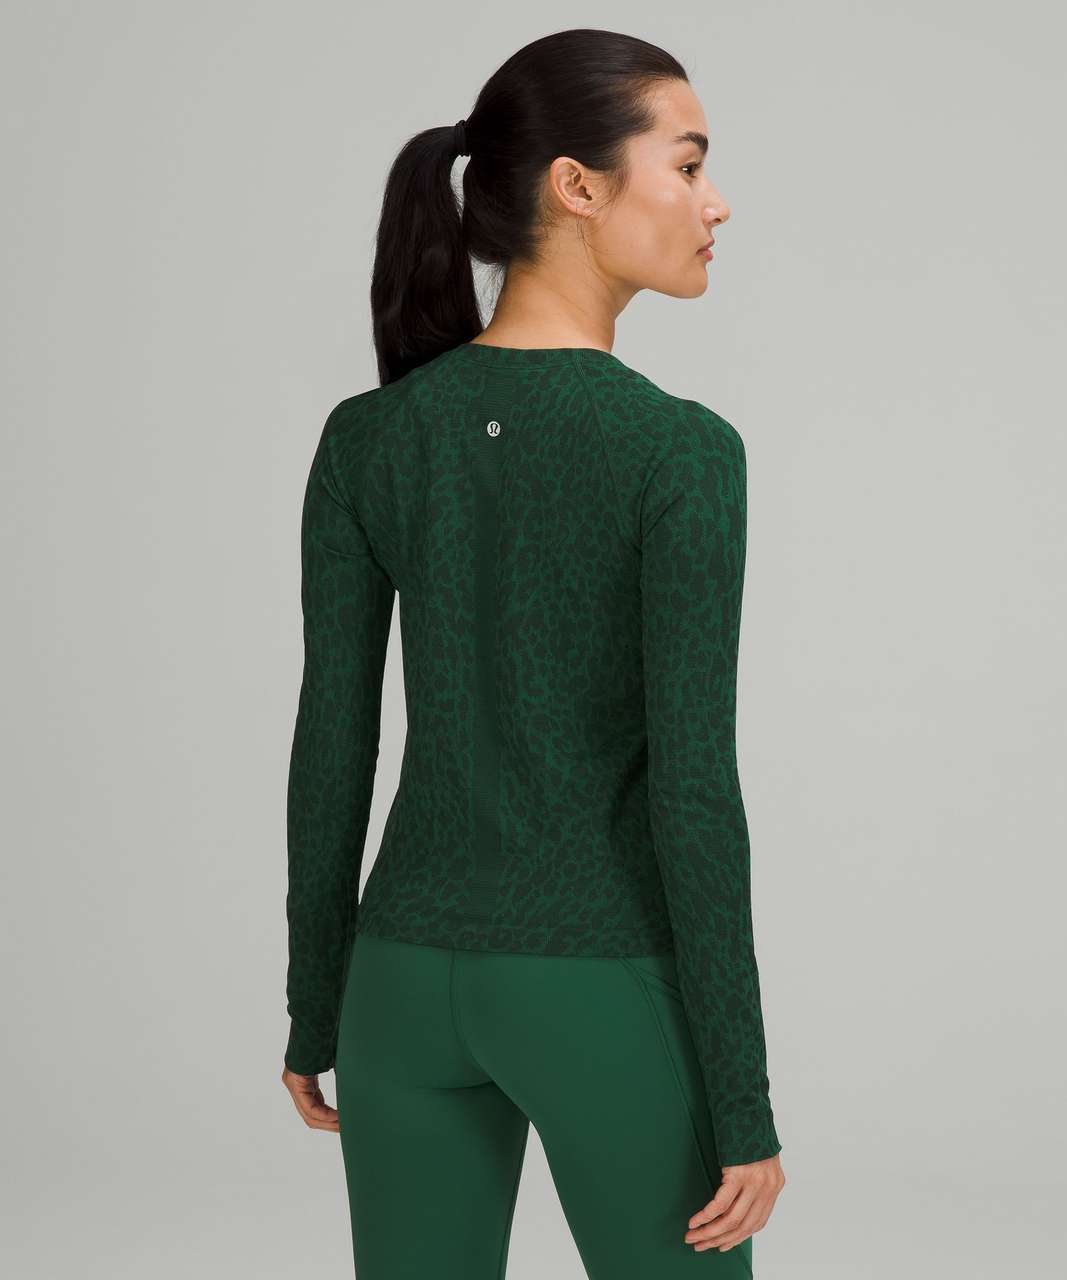 Lululemon Swiftly Tech Long Sleeve Shirt 2.0 *Race Length - Particolour Everglade Green / Black